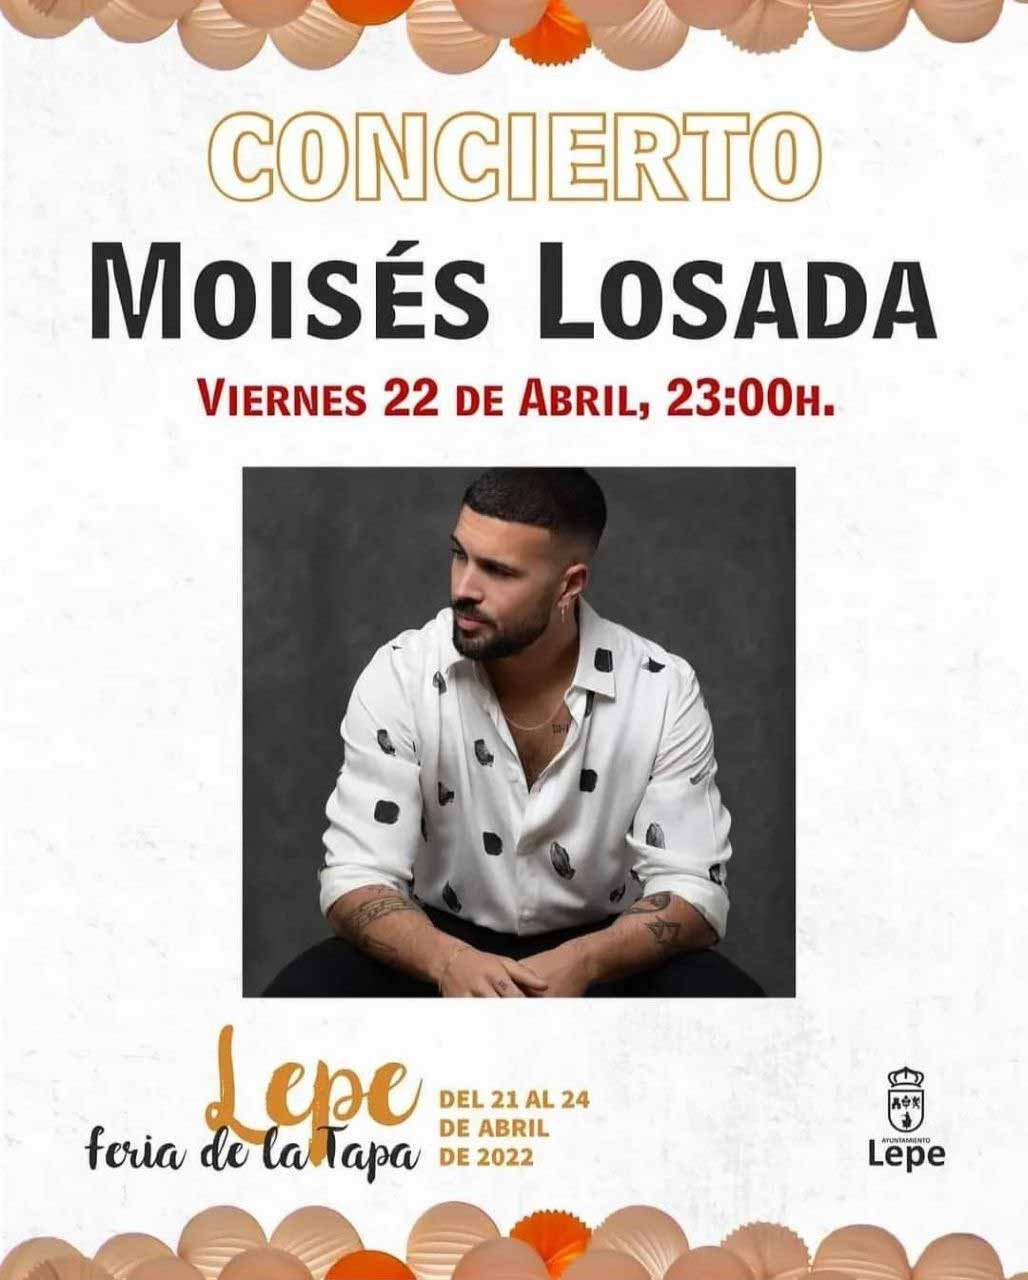 Moises Losada en concierto 22 de abril feria de la tapa Lepe 2022